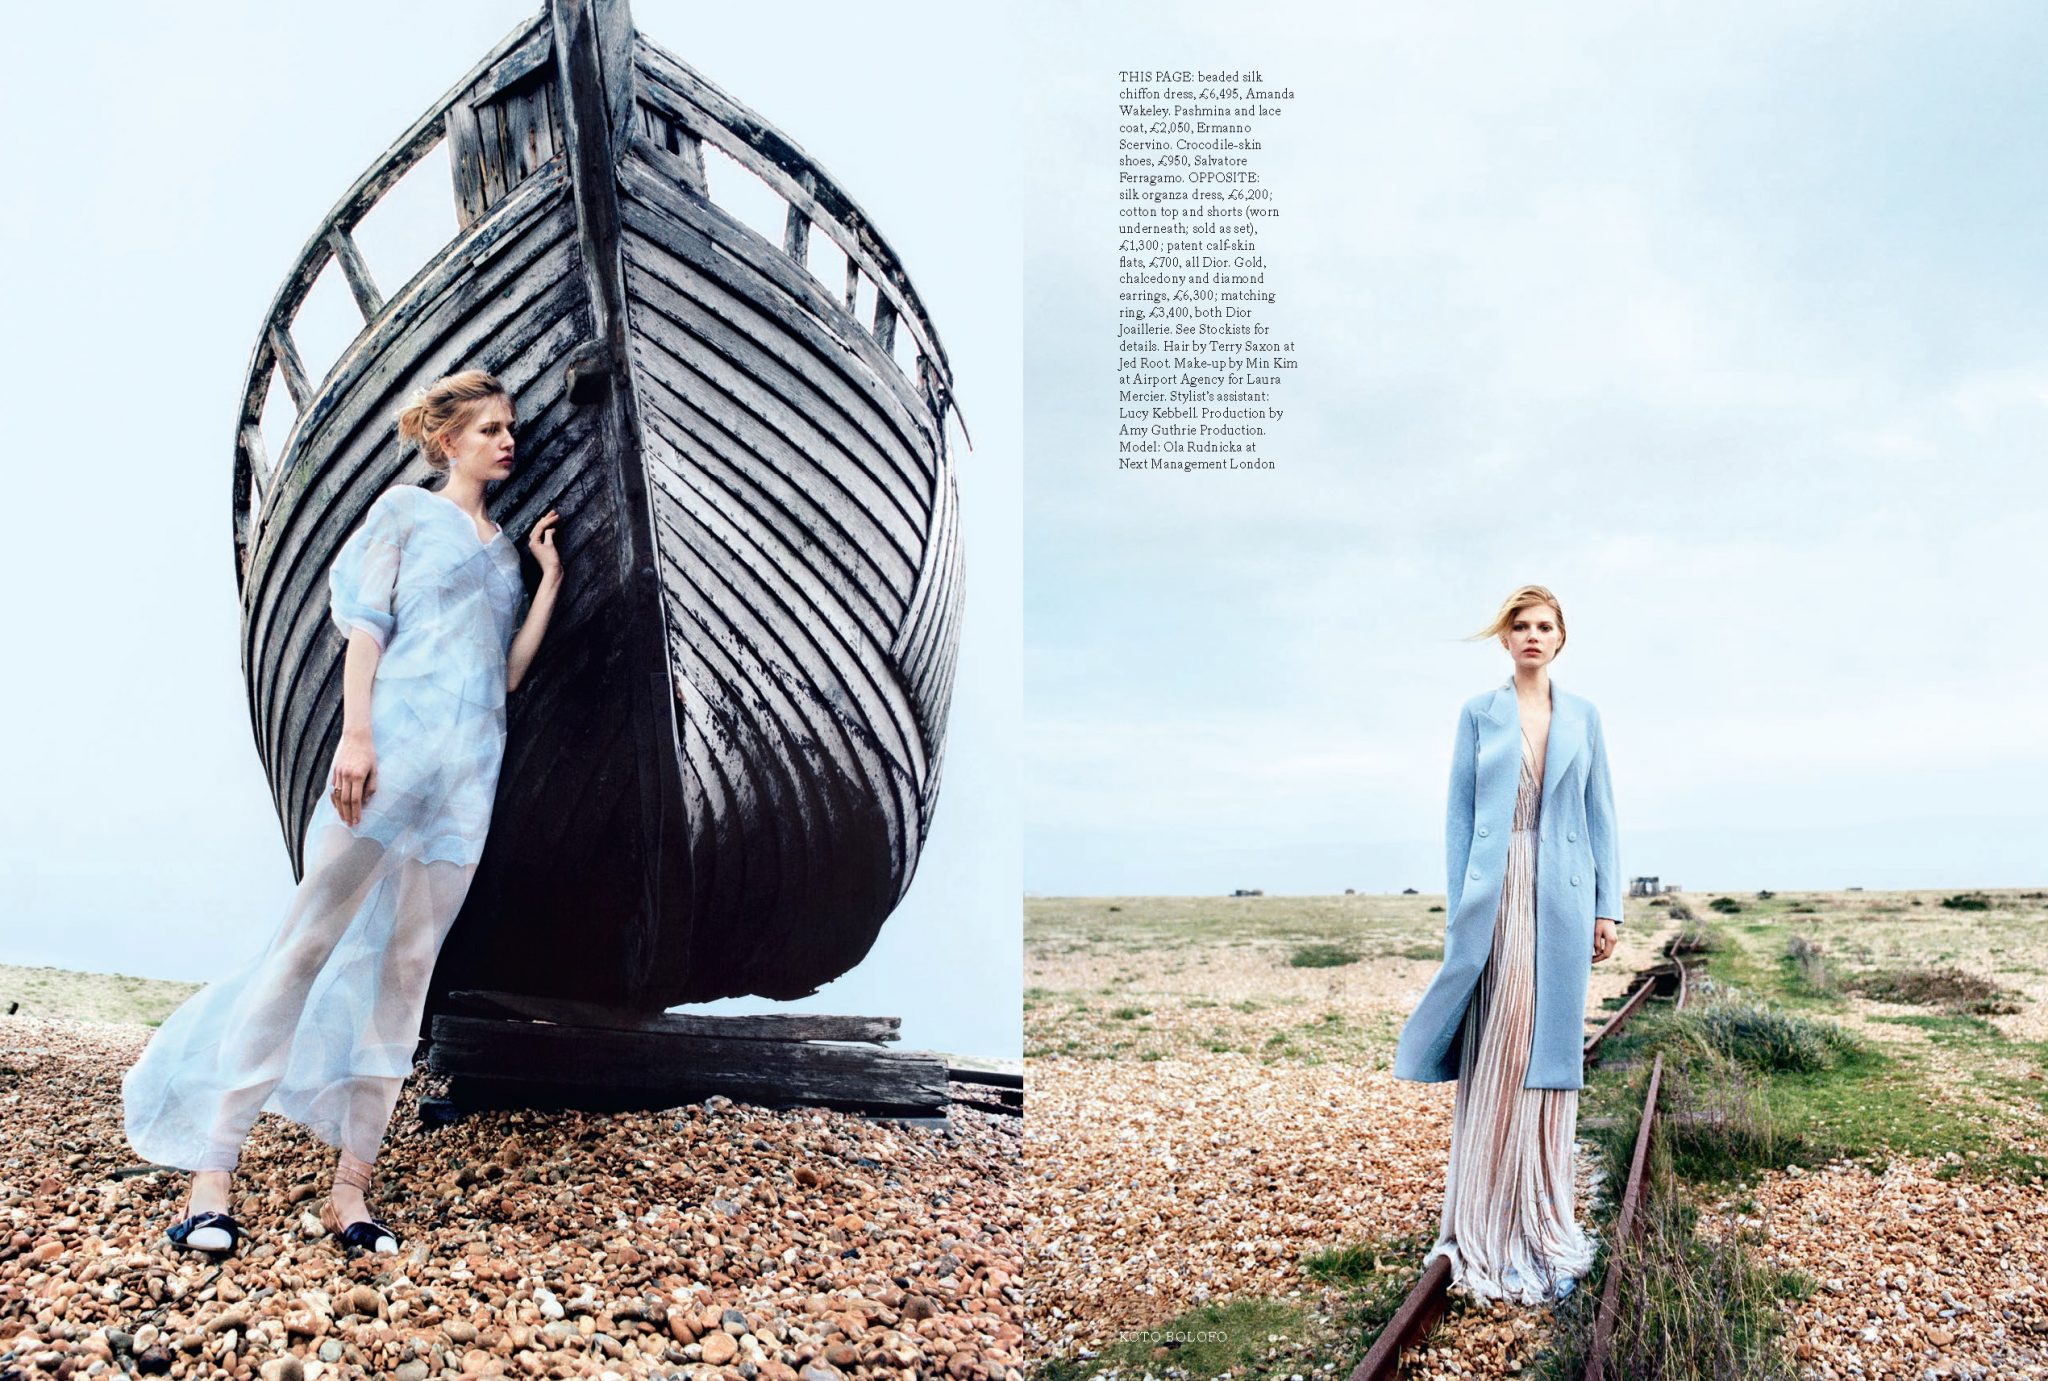 Koto Bolofo | Harper's Bazaar UK: The Beauty and the Beach  | 7